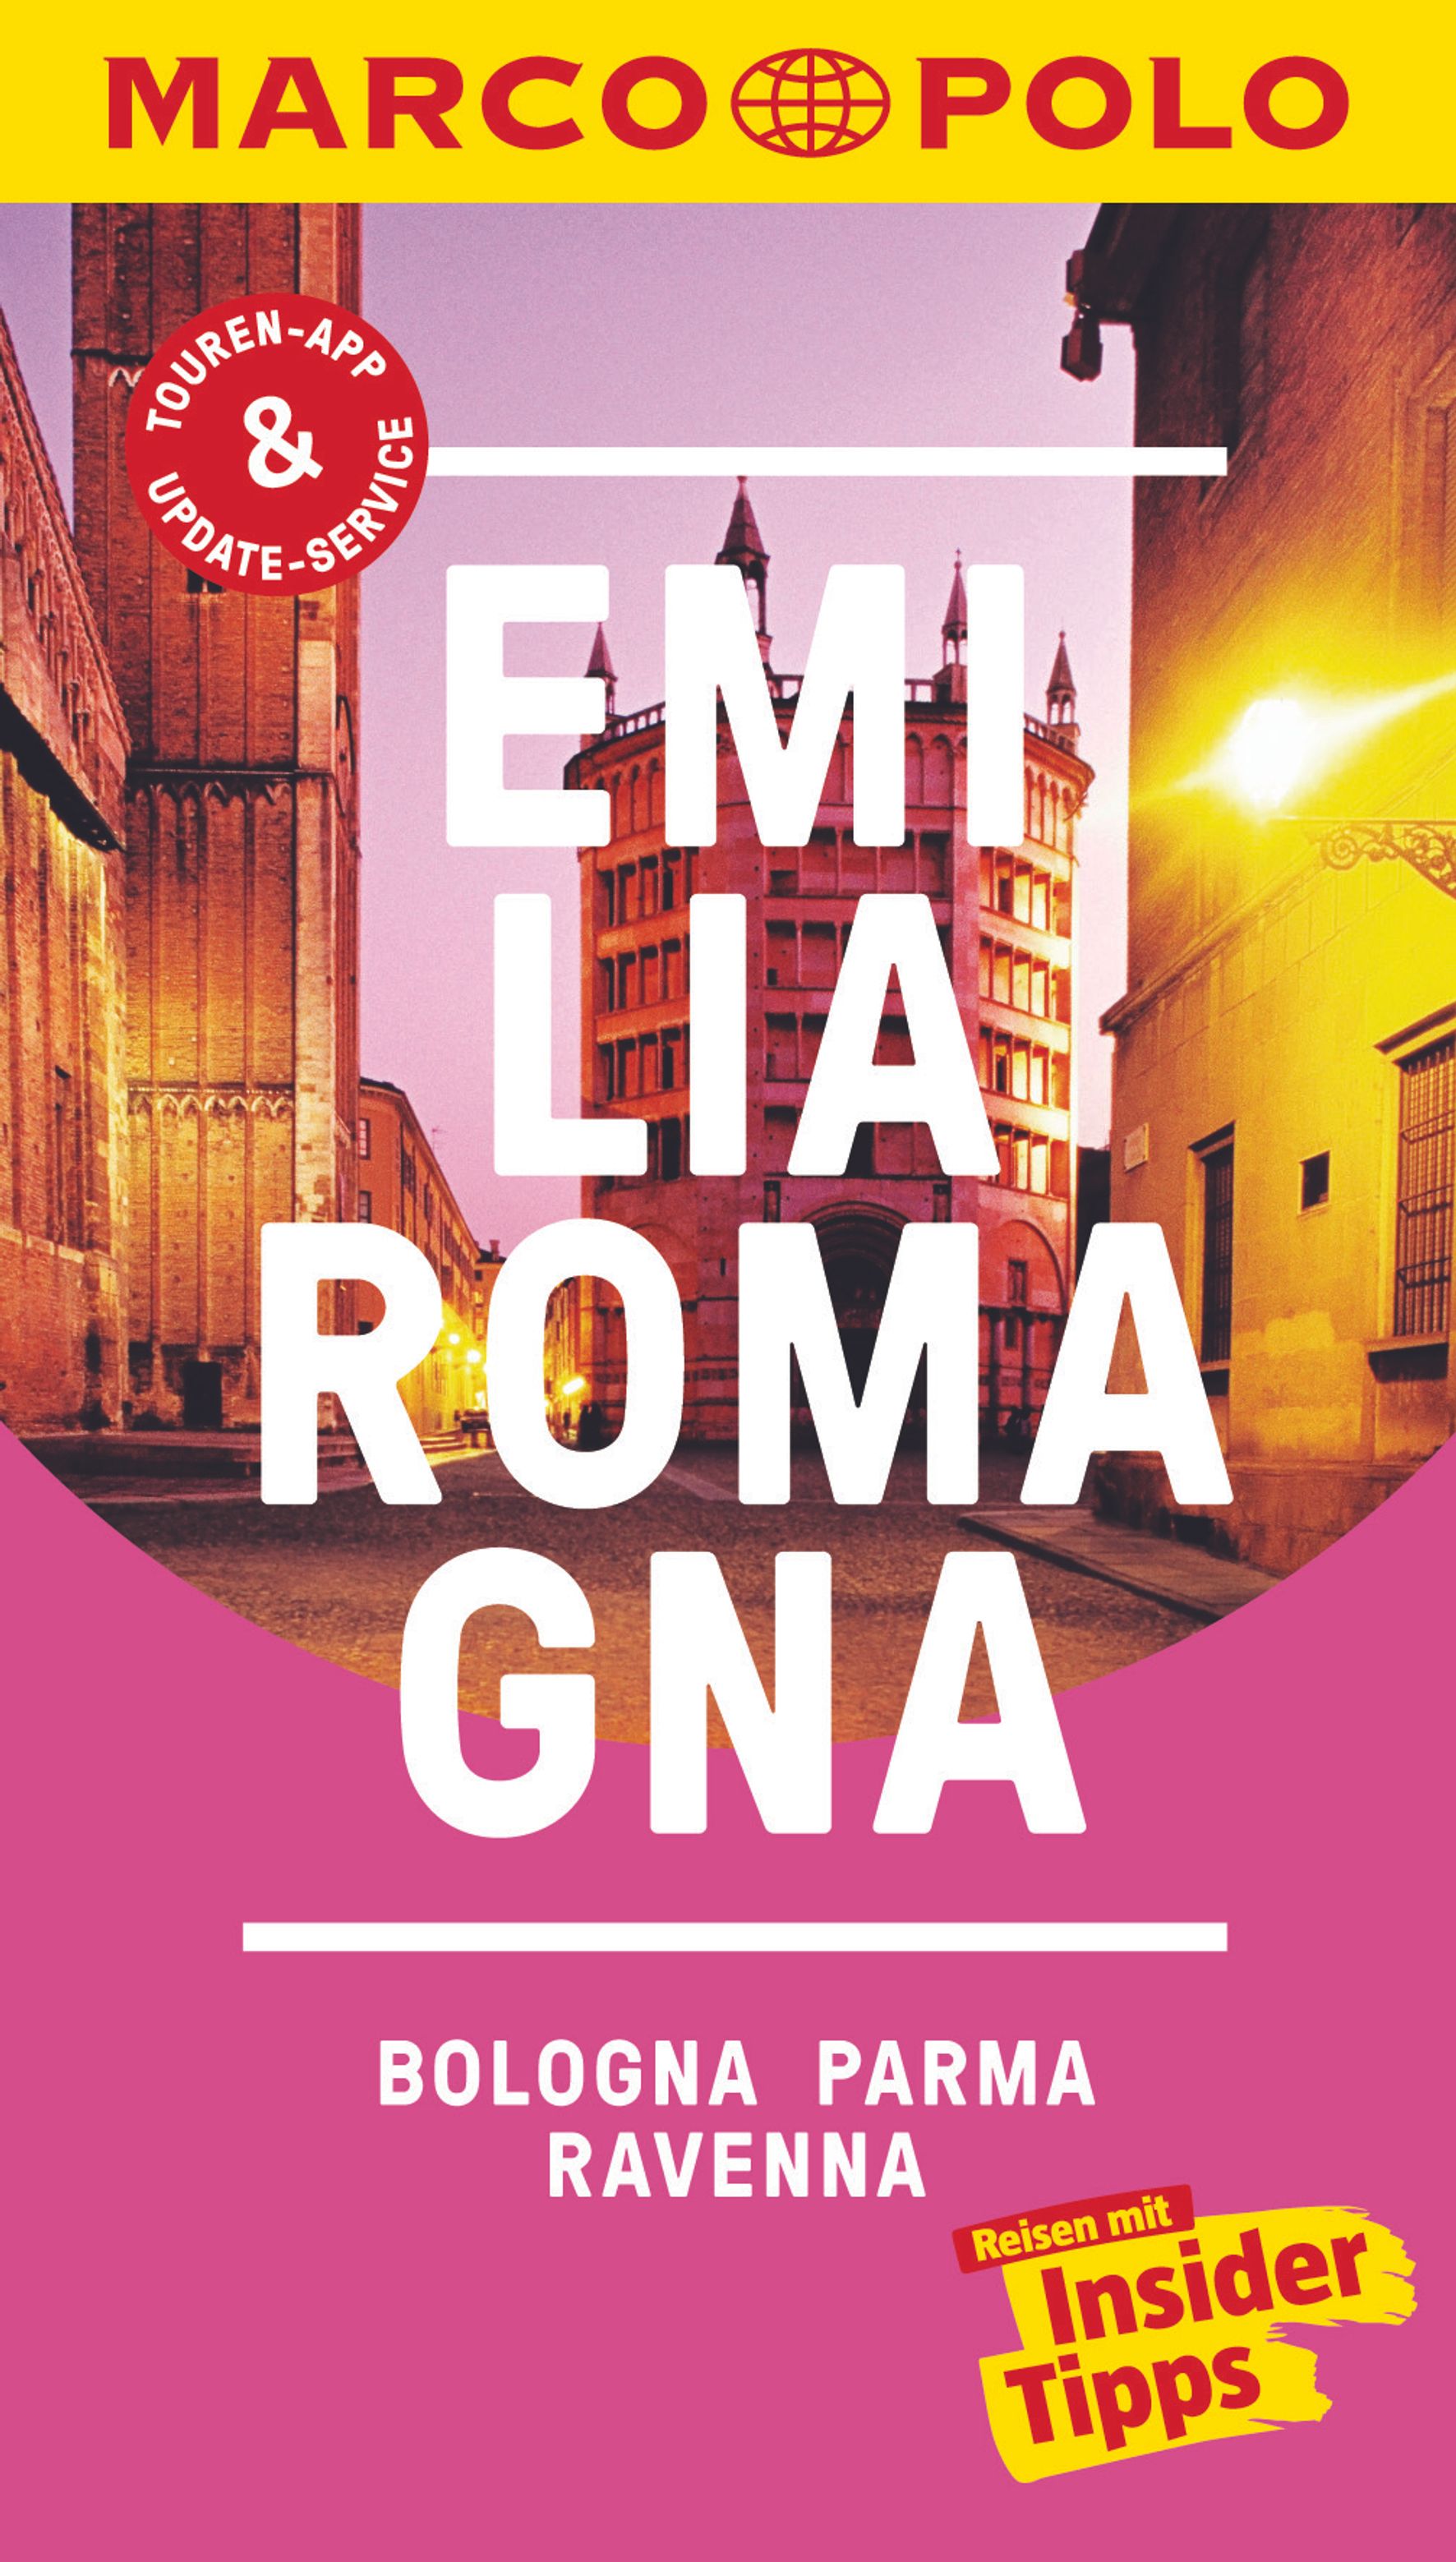 MAIRDUMONT Emilia-Romagna, Bologna, Parma, Ravenna (eBook)